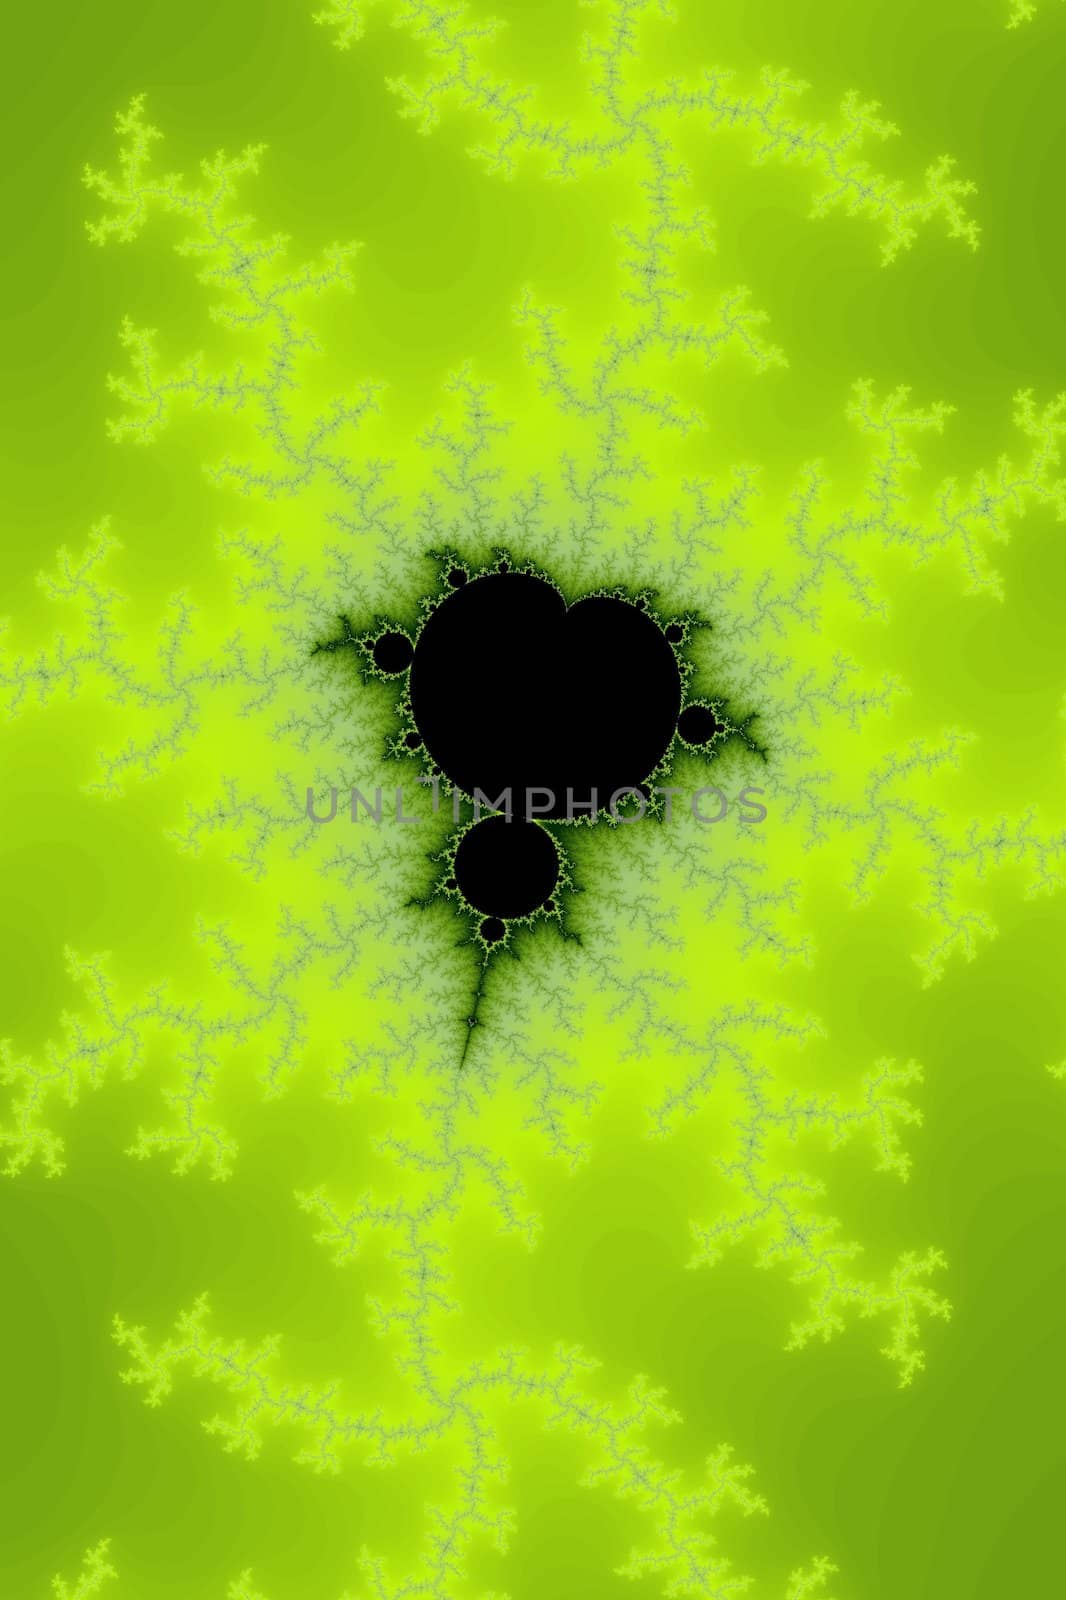 Mandelbrot fractal in the colors of green.